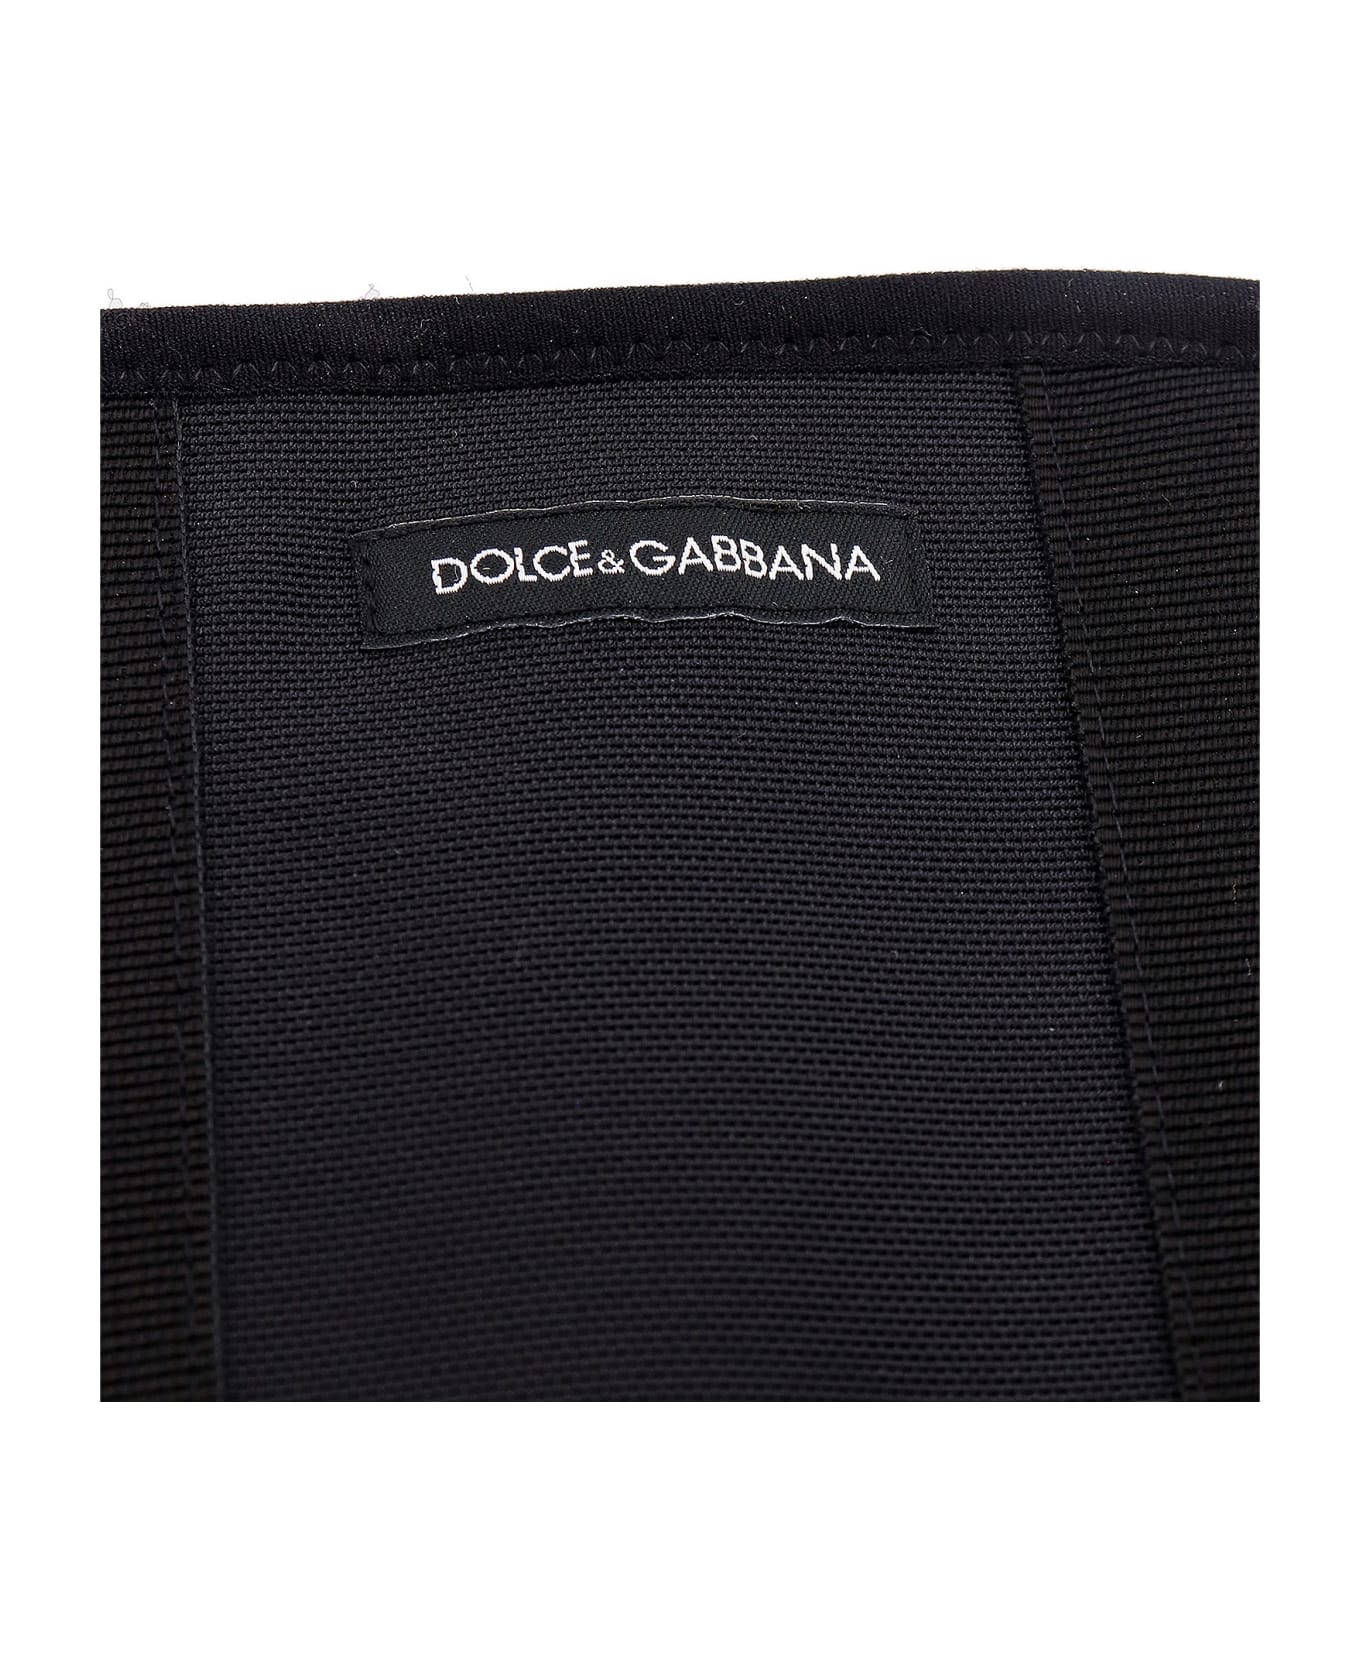 Dolce & Gabbana Bustier - Black